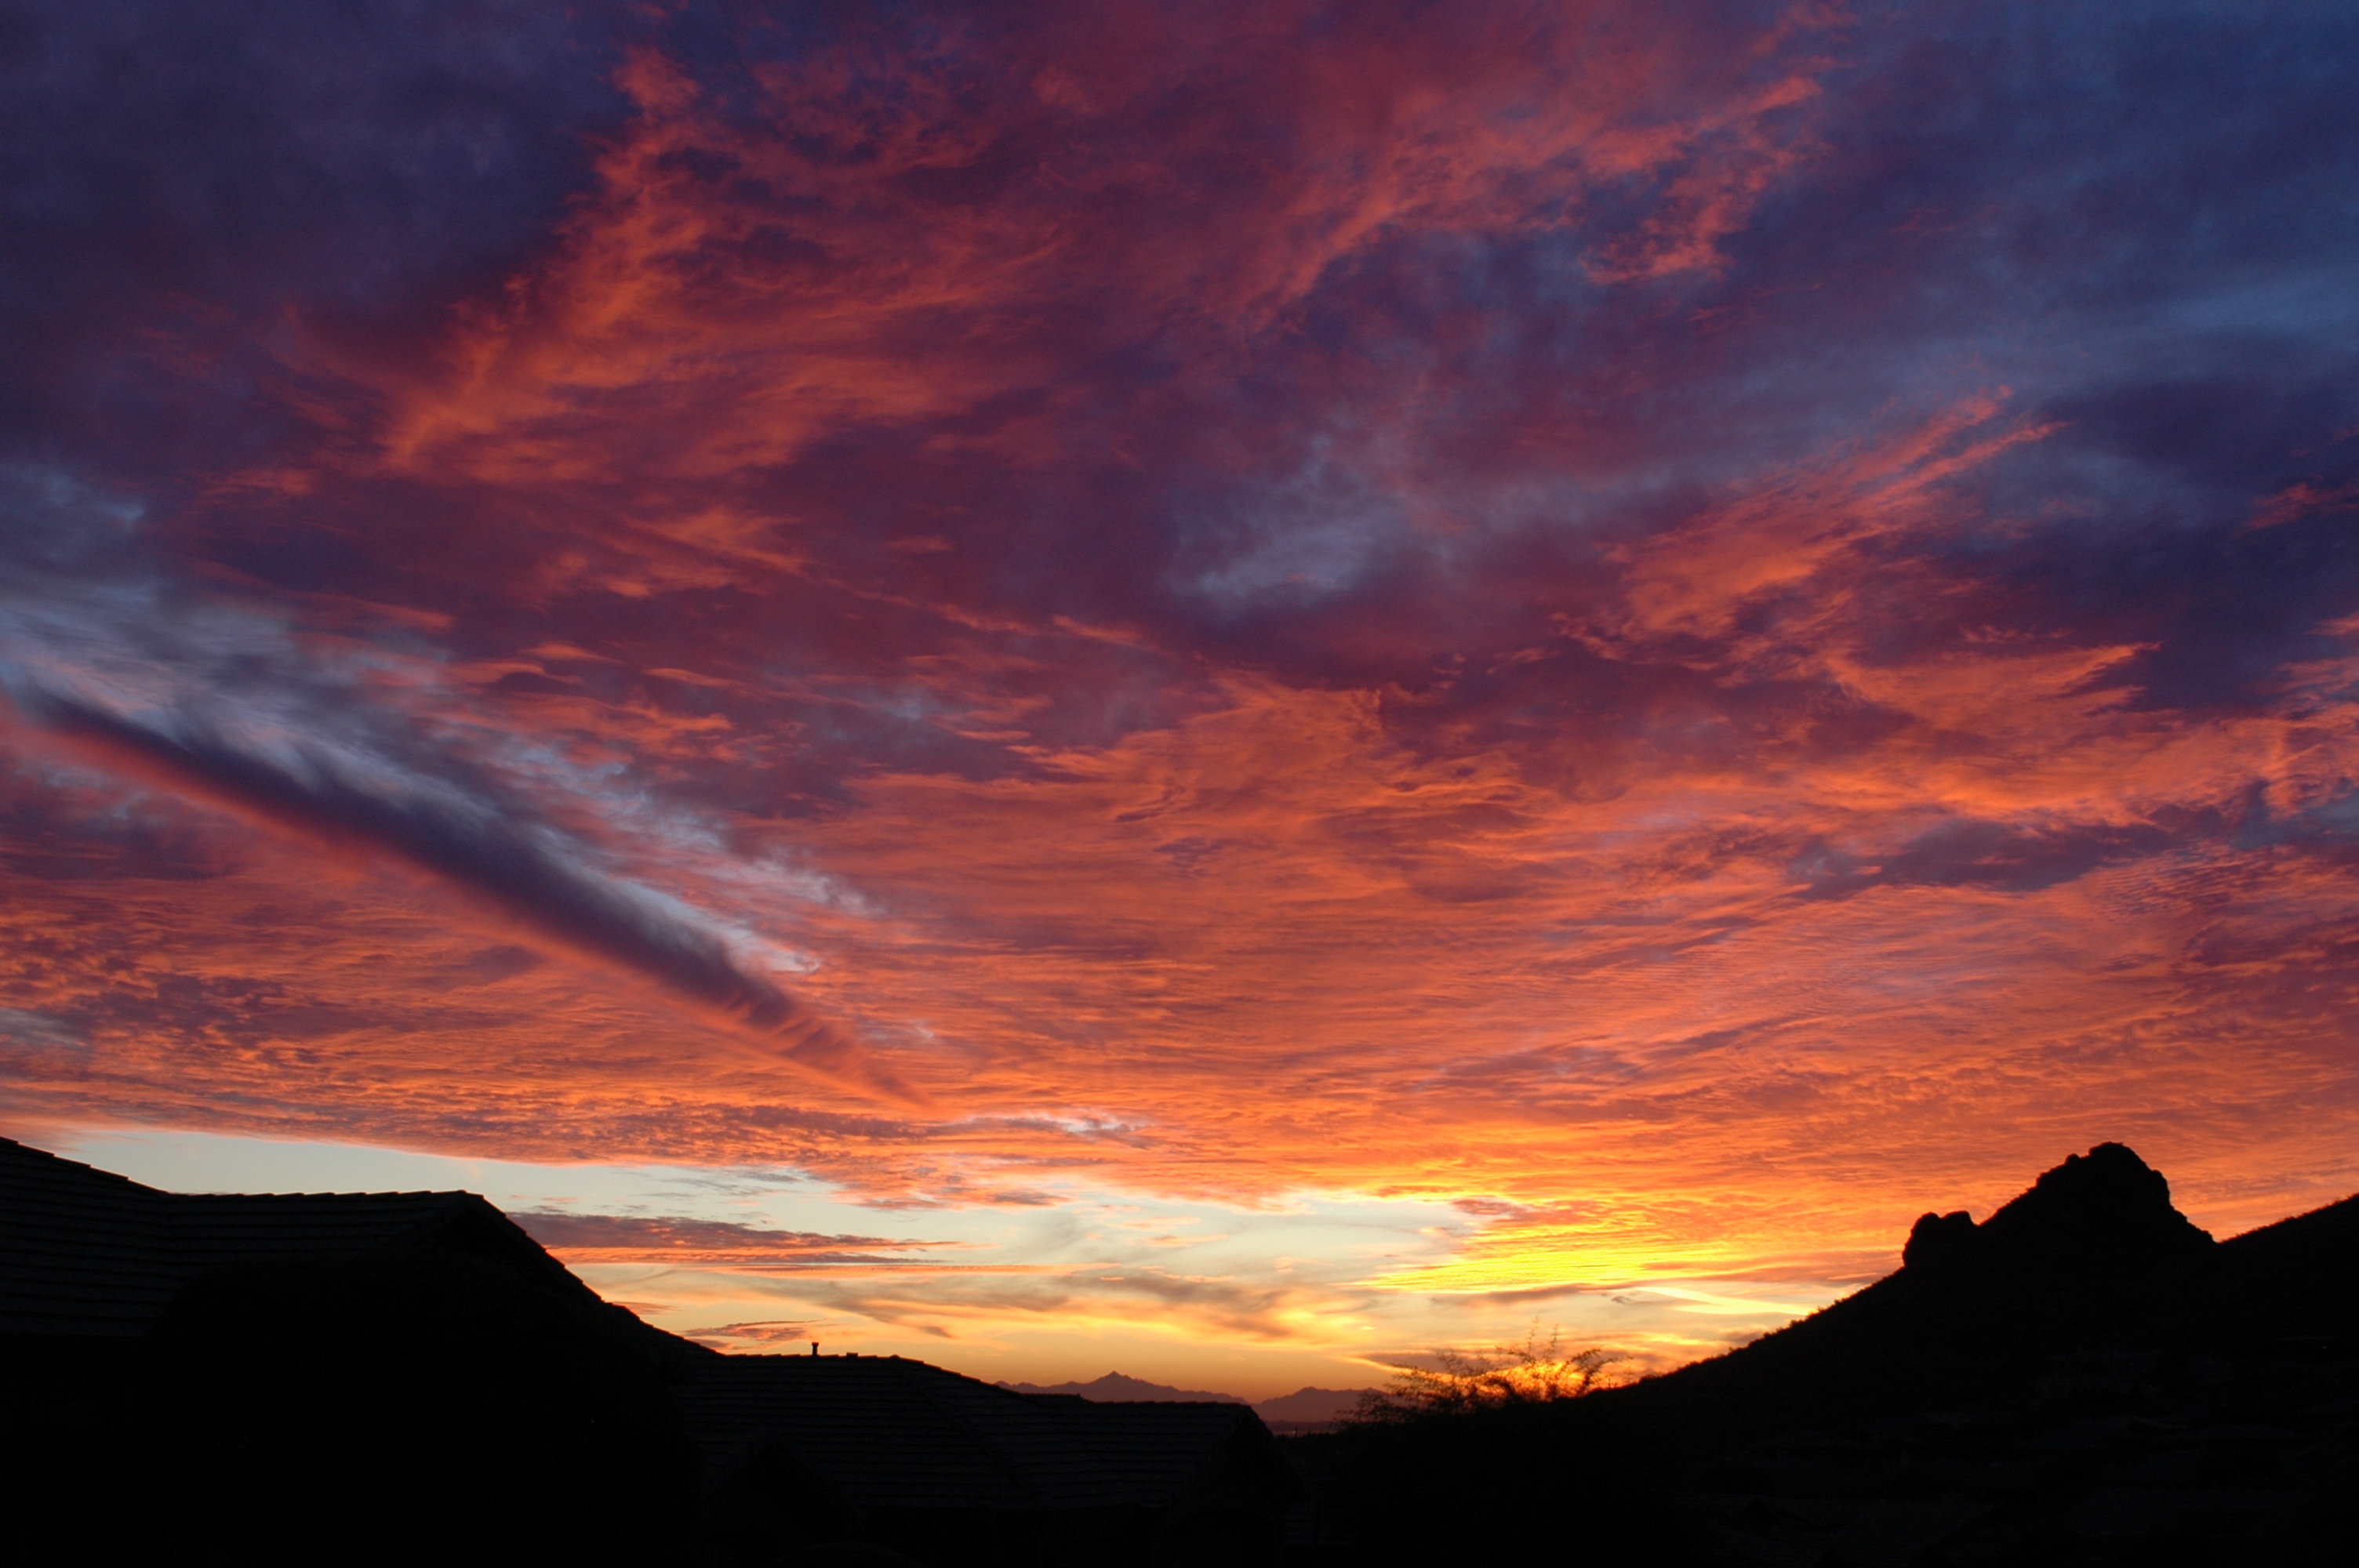 Joe Dobrow photo of sunset in Arizona